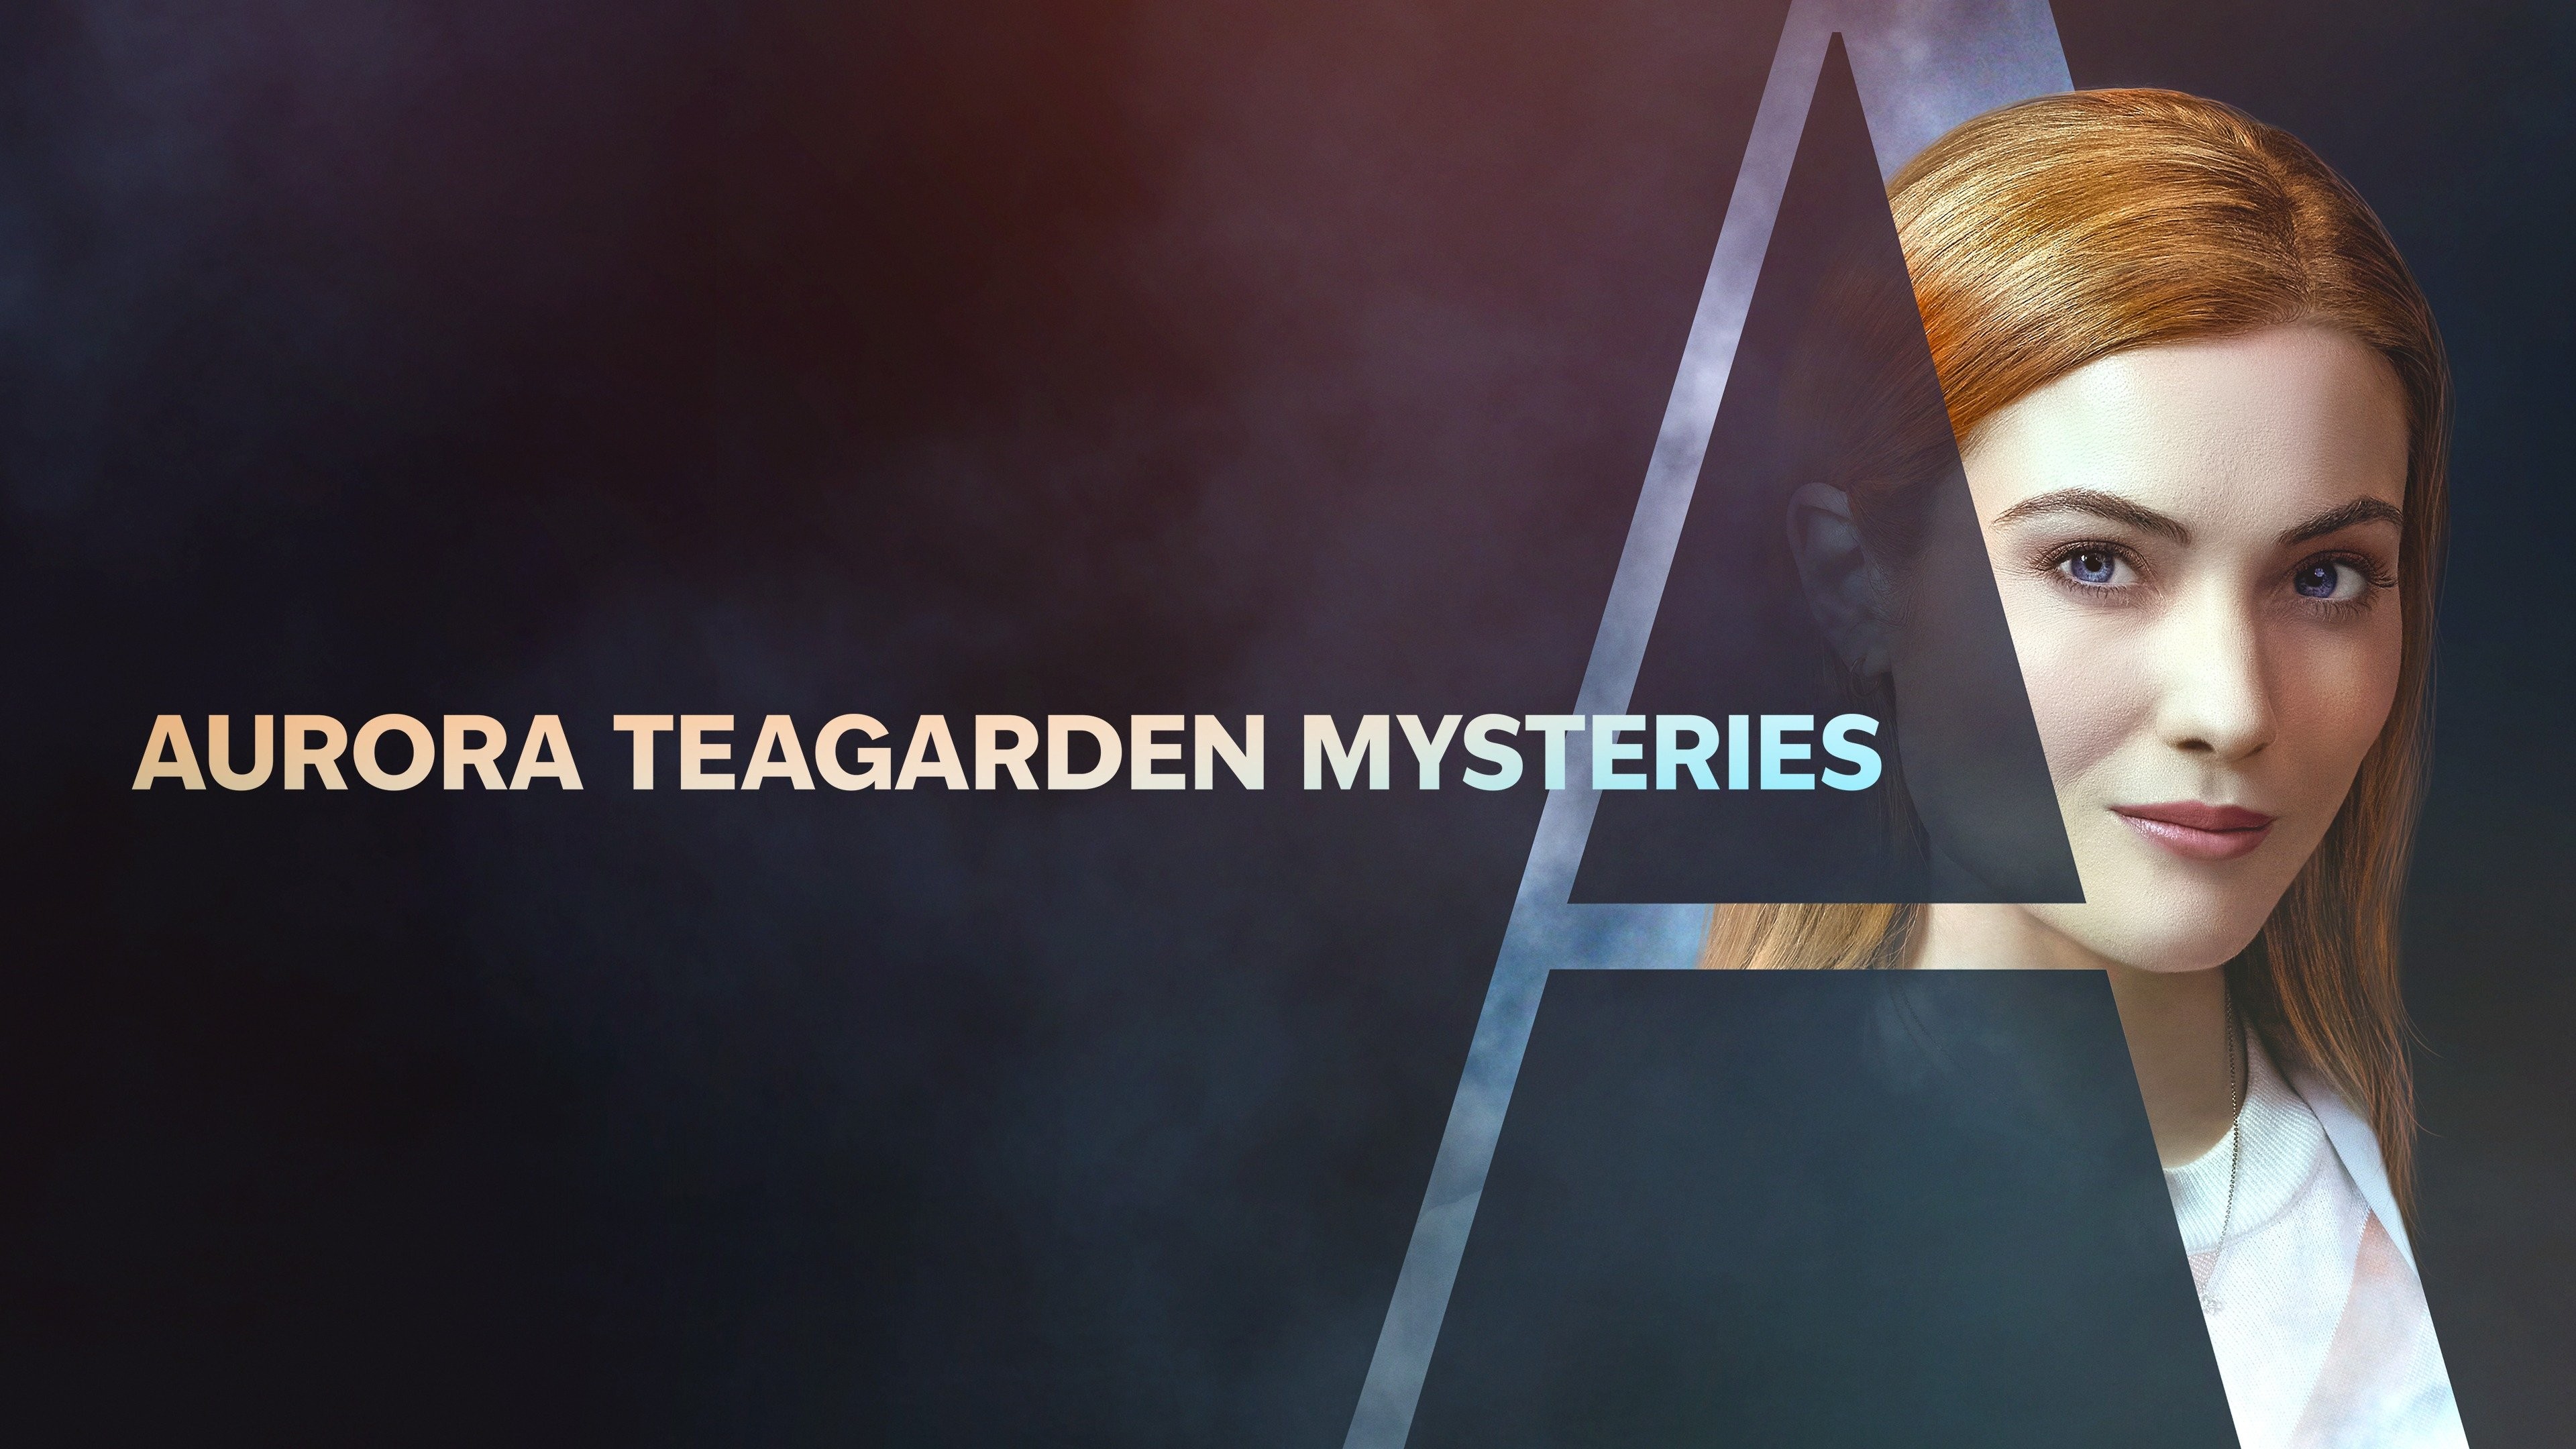 Who Is the New Aurora Teagarden? Skyler Samuels, Candace Cameron Bure